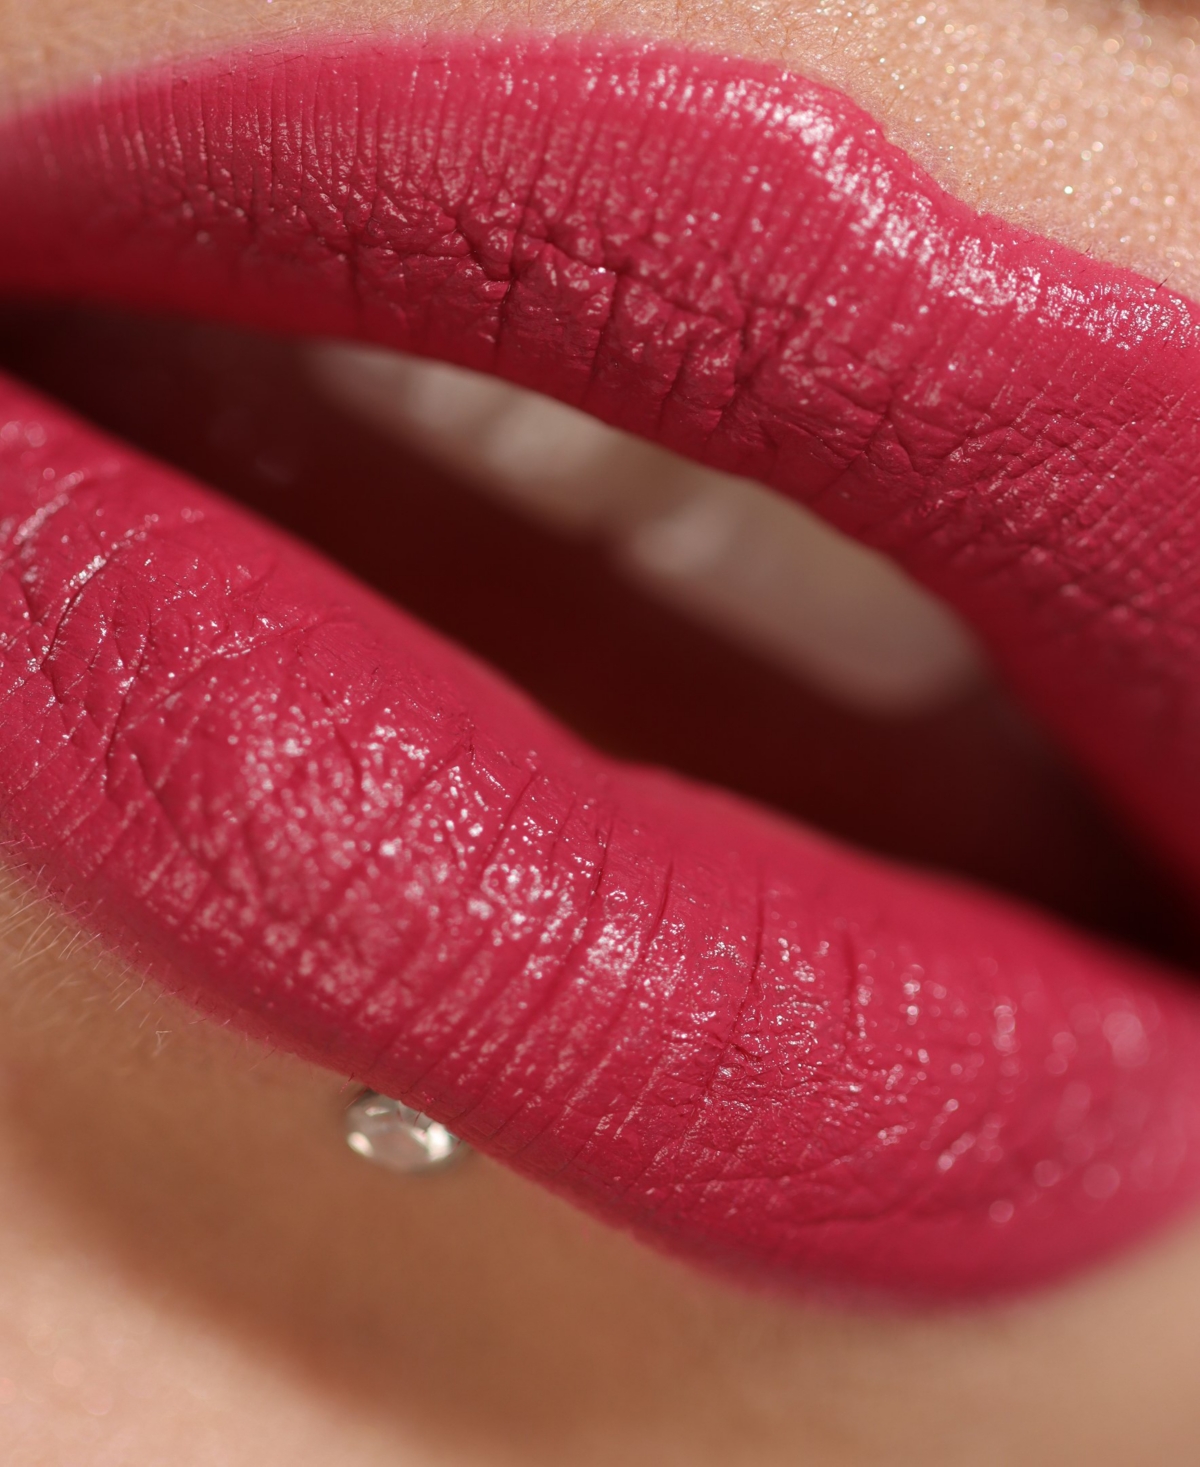 Shop Lord & Berry Vogue Matte Lipstick In Passionate- Dark Brown Nude